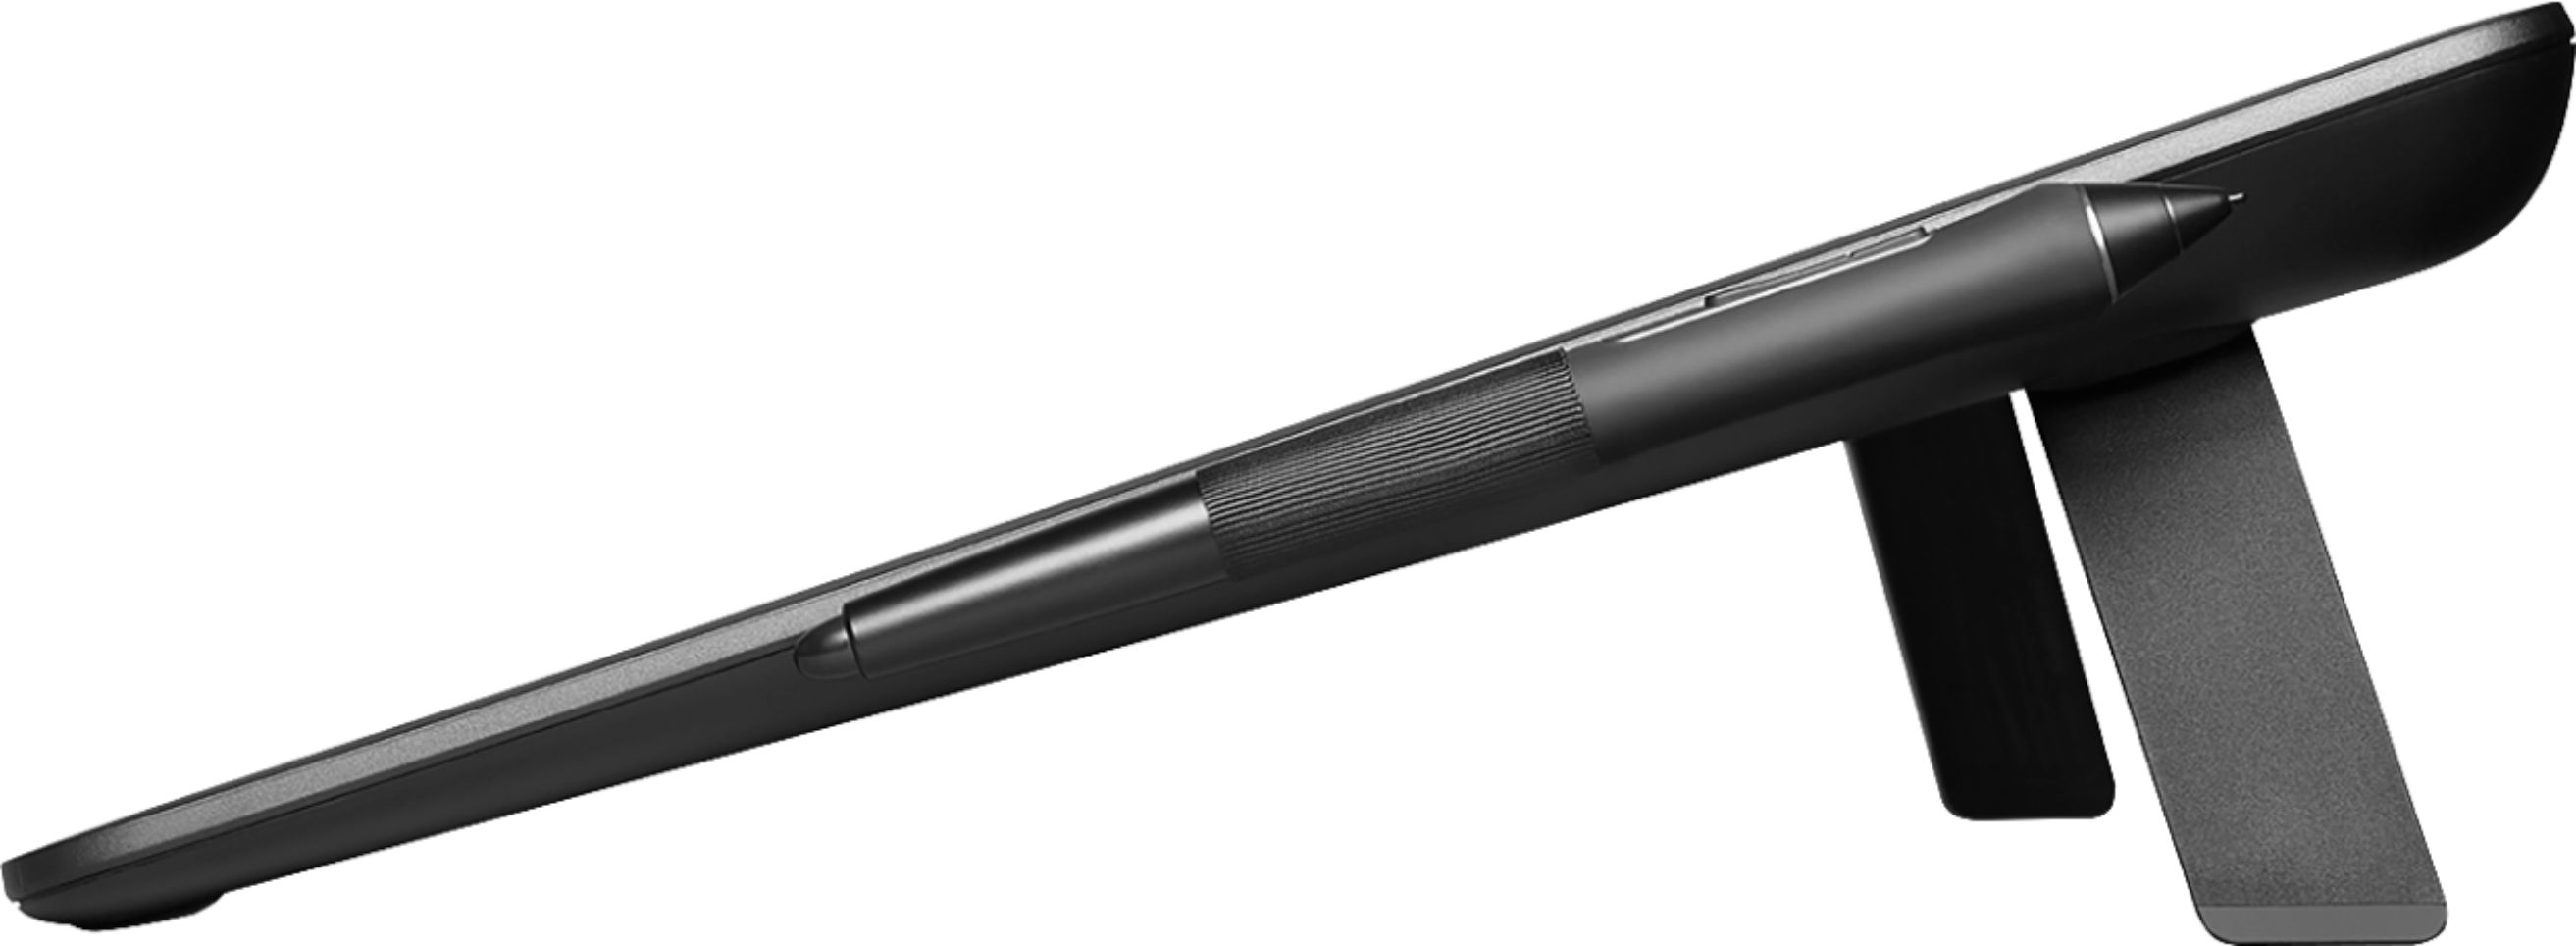 Wacom Cintiq 16 Creative Pen Display Drawing Tablet Black 